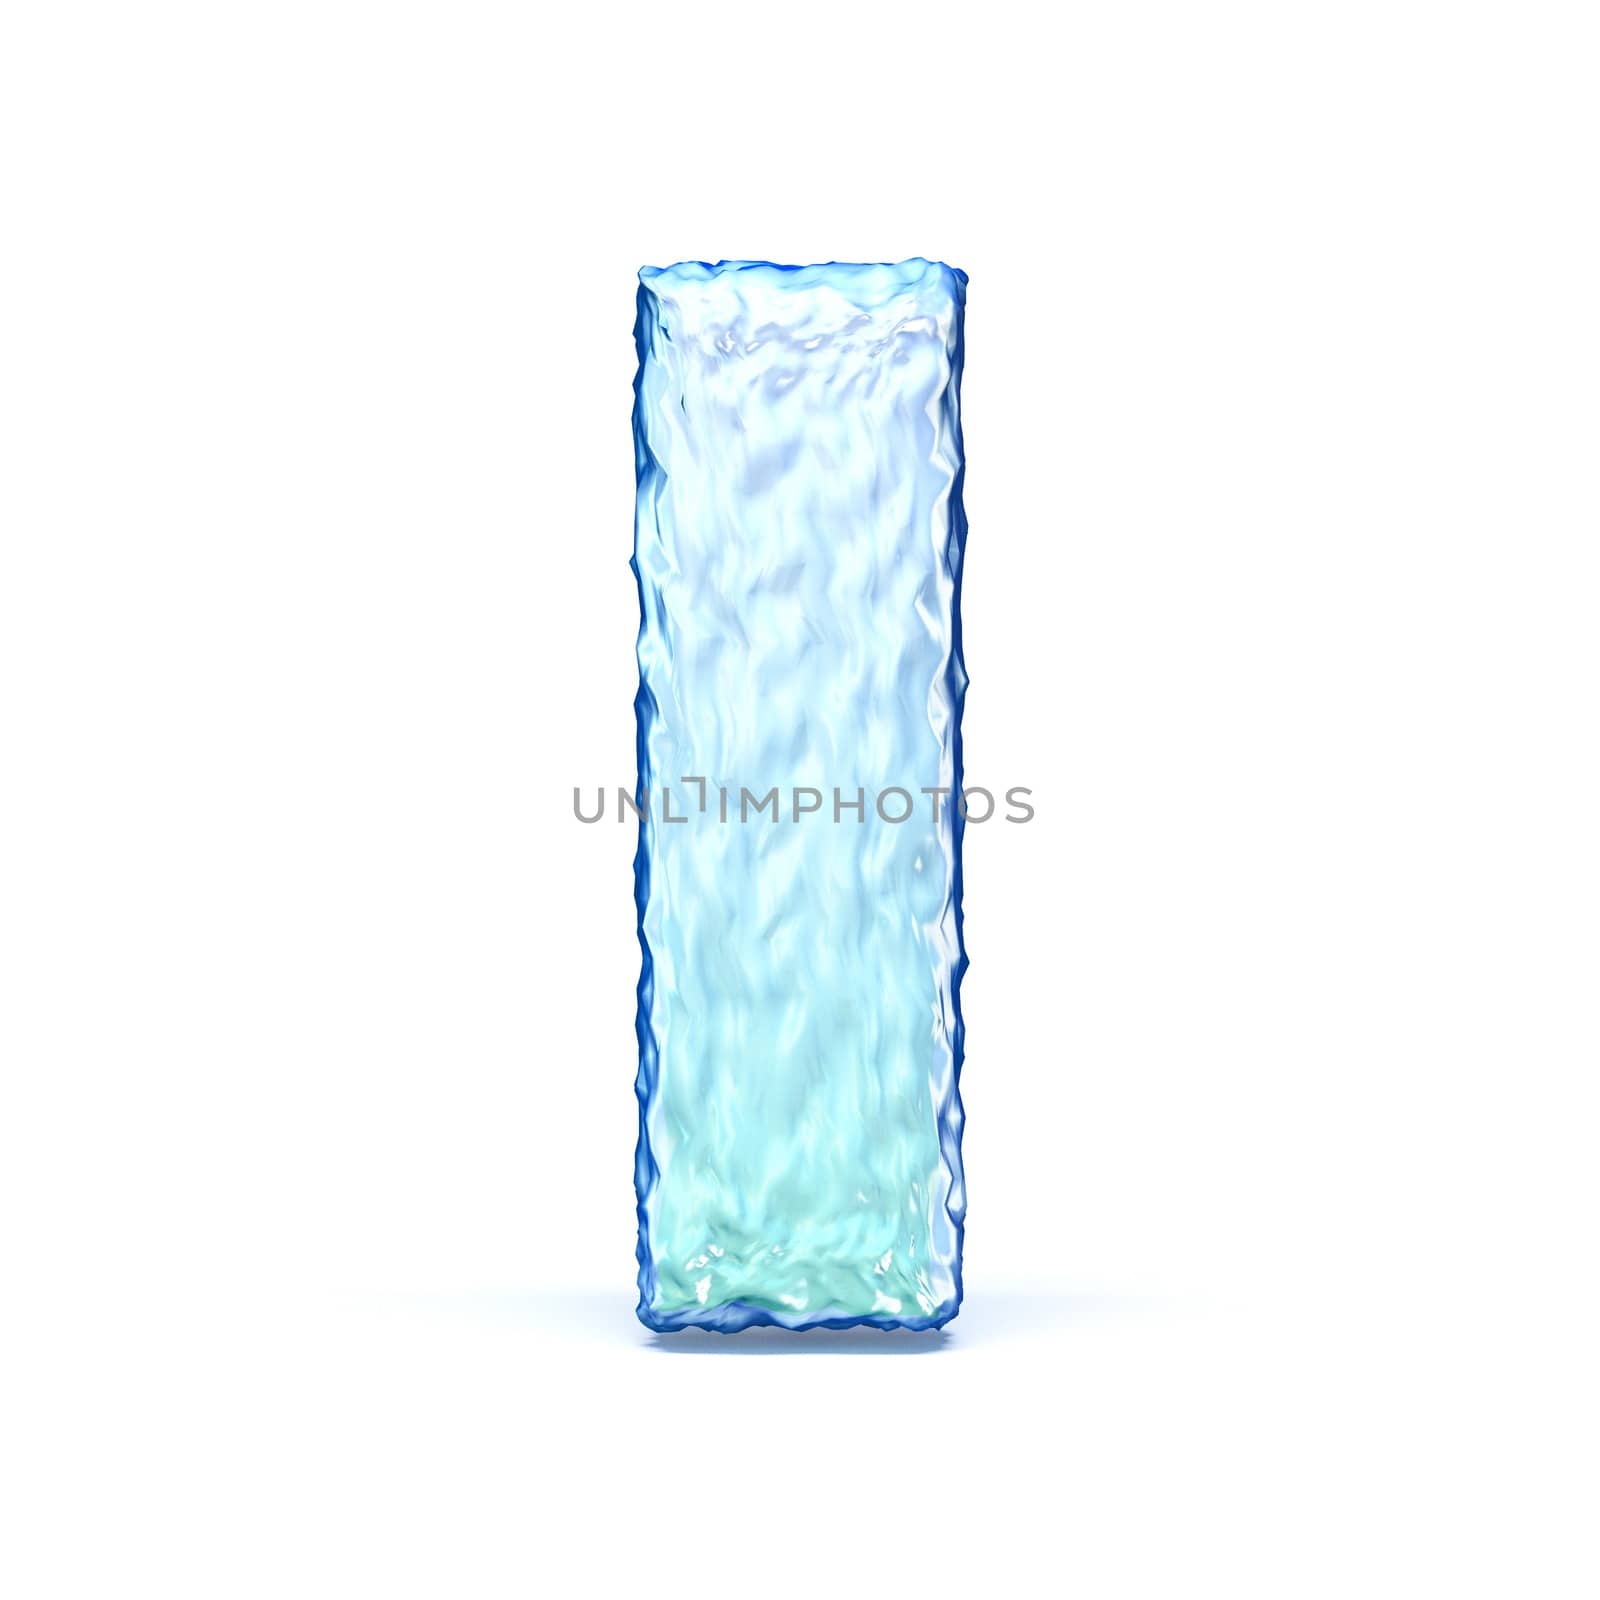 Ice crystal font letter I 3D render illustration isolated on white background